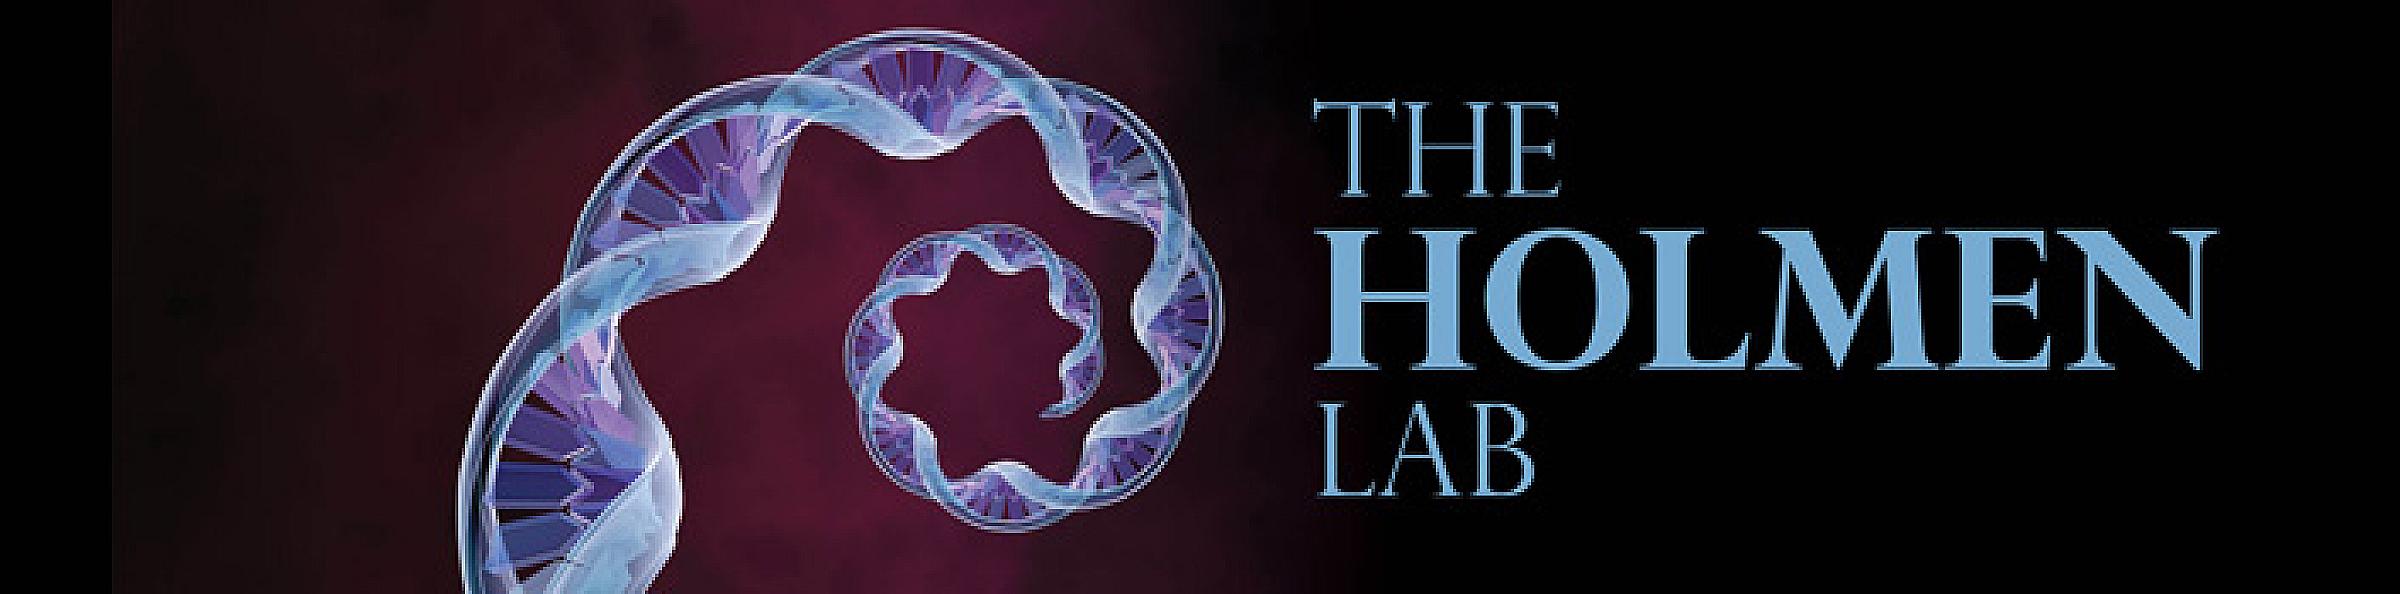 The Holmen Lab Hero Image DNA